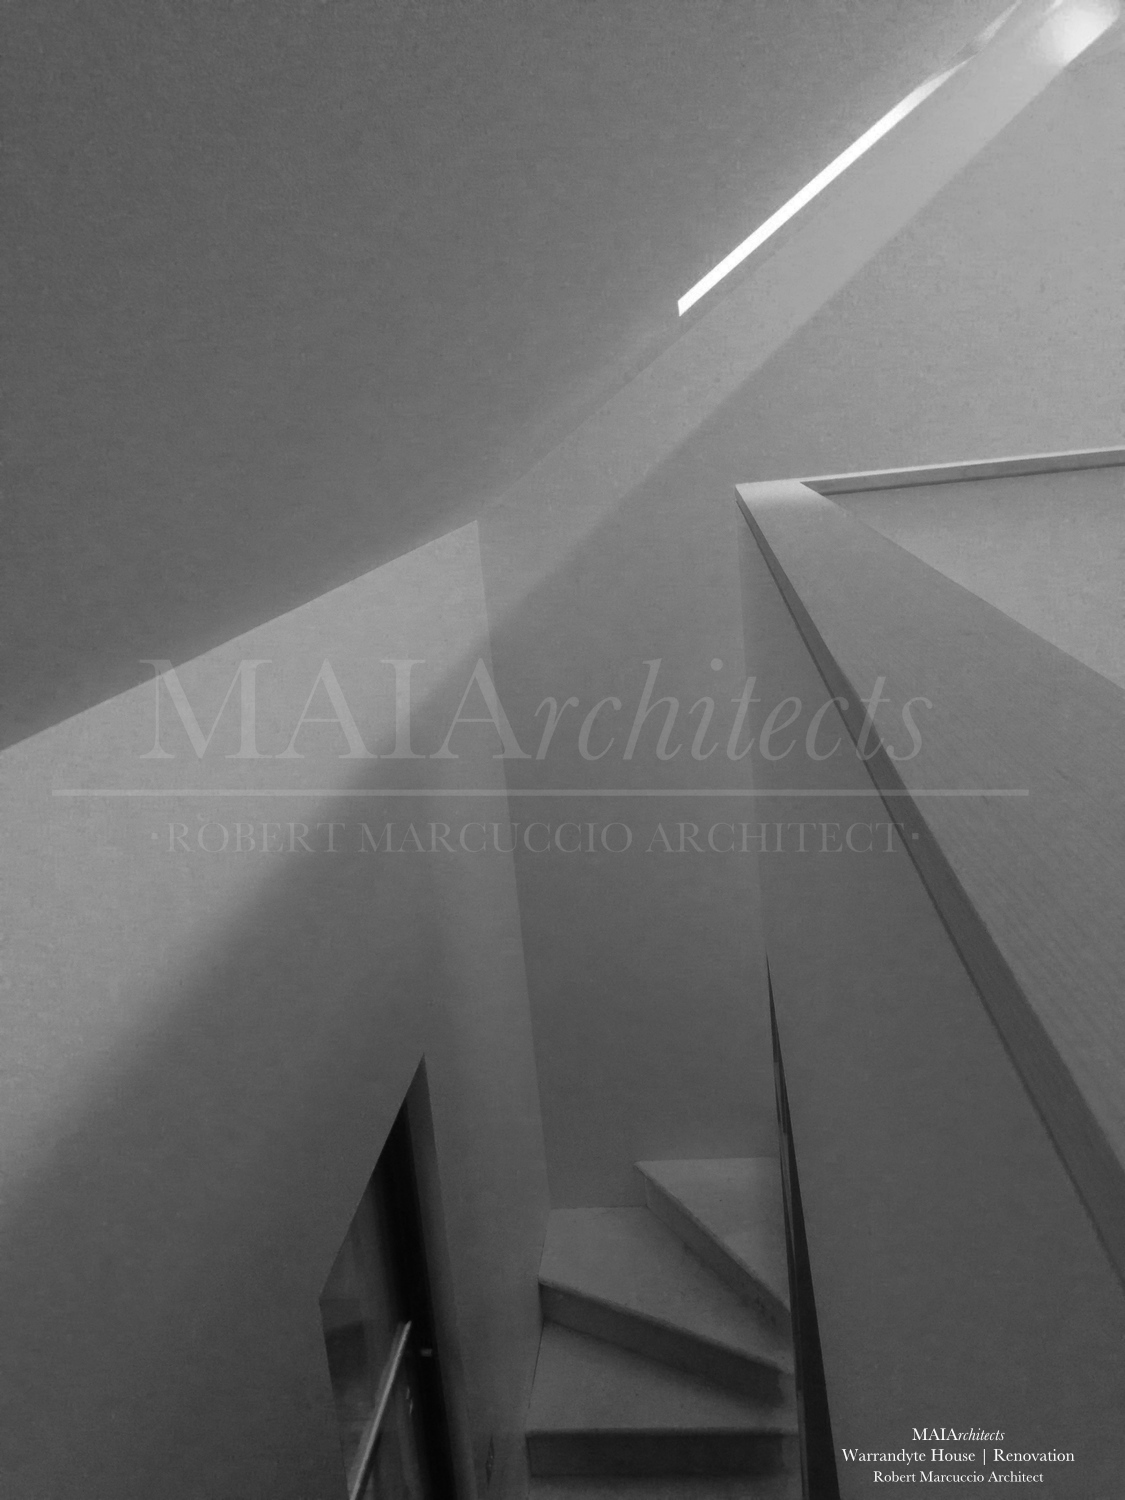 MAIArchitects_warrandyte_house_mezzanine_02_robert_marcuccio_architect.jpg